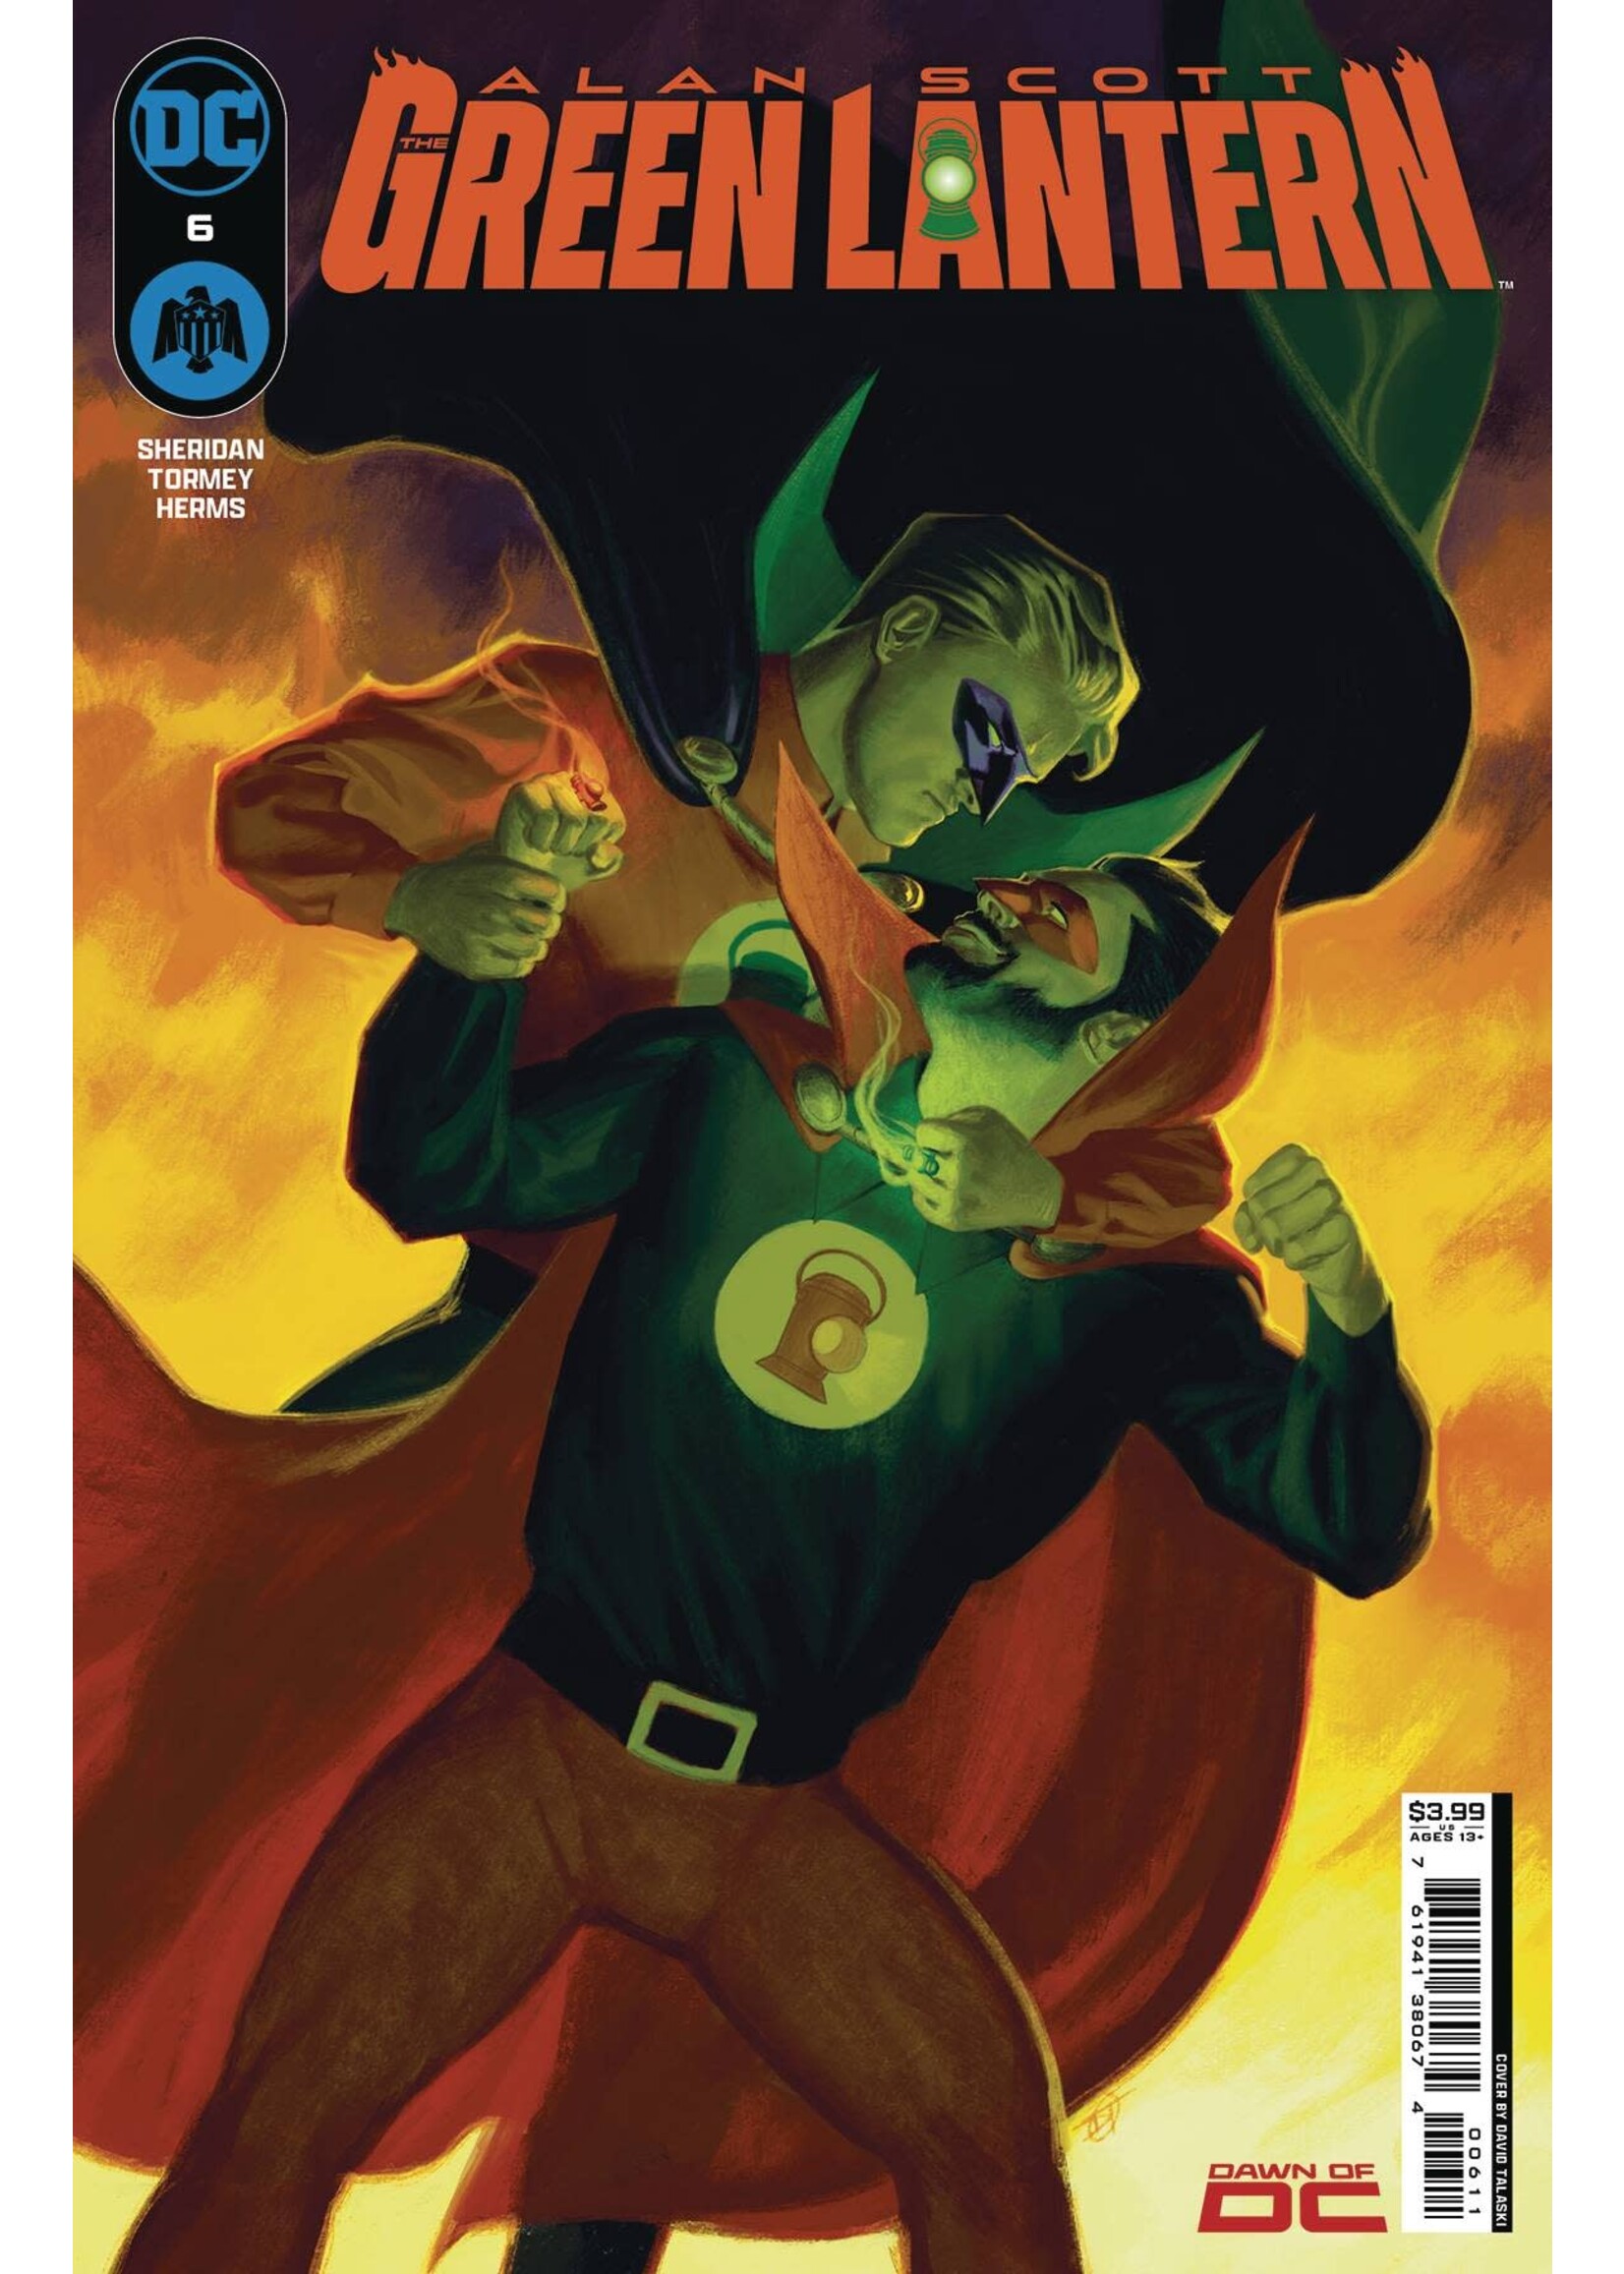 DC COMICS ALAN SCOTT THE GREEN LANTERN #6